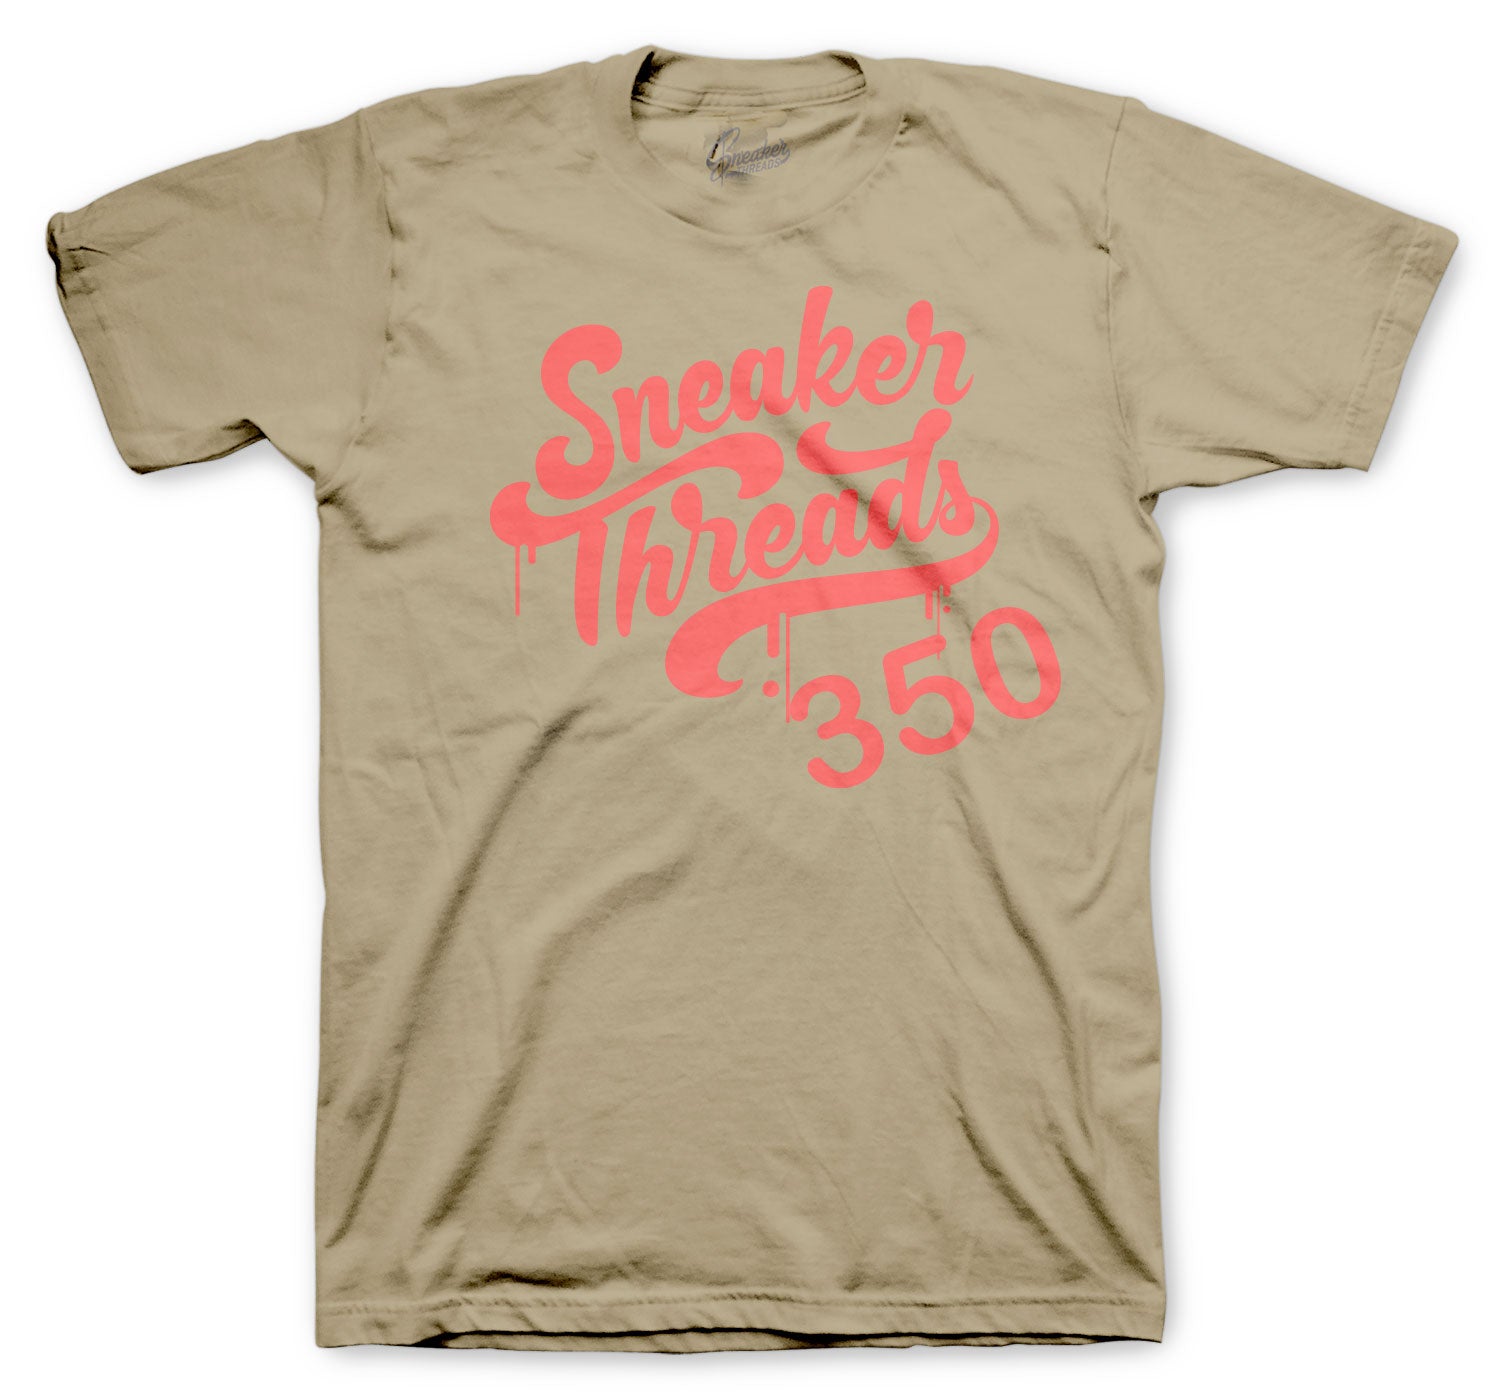 Sand Taupe 350 Shirt - ST 350 - Tan